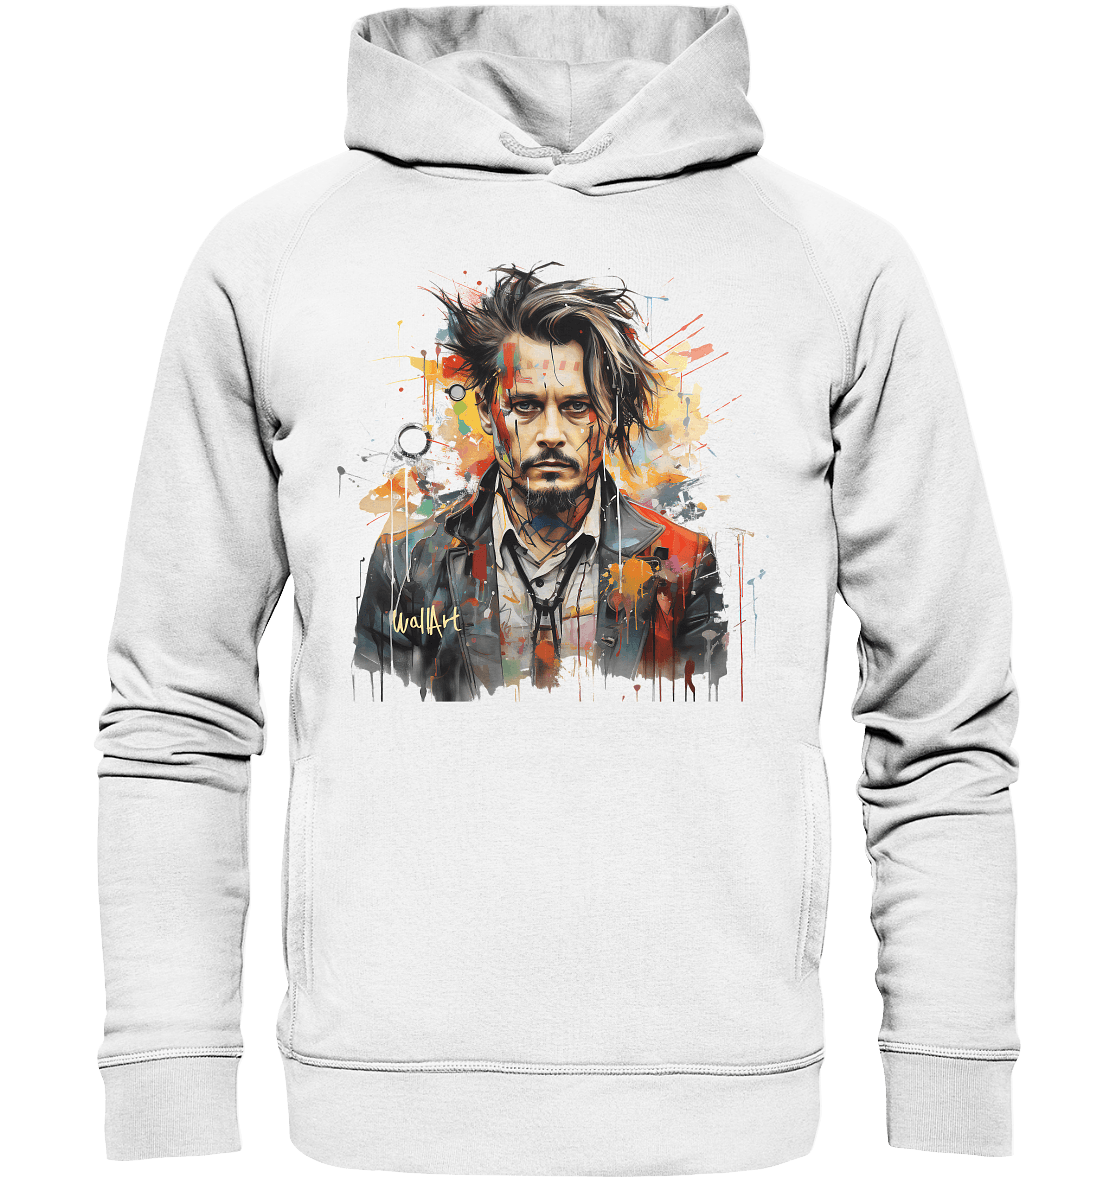 WallArt - Johnny Depp - Organic Fashion Hoodie - Snapshirts